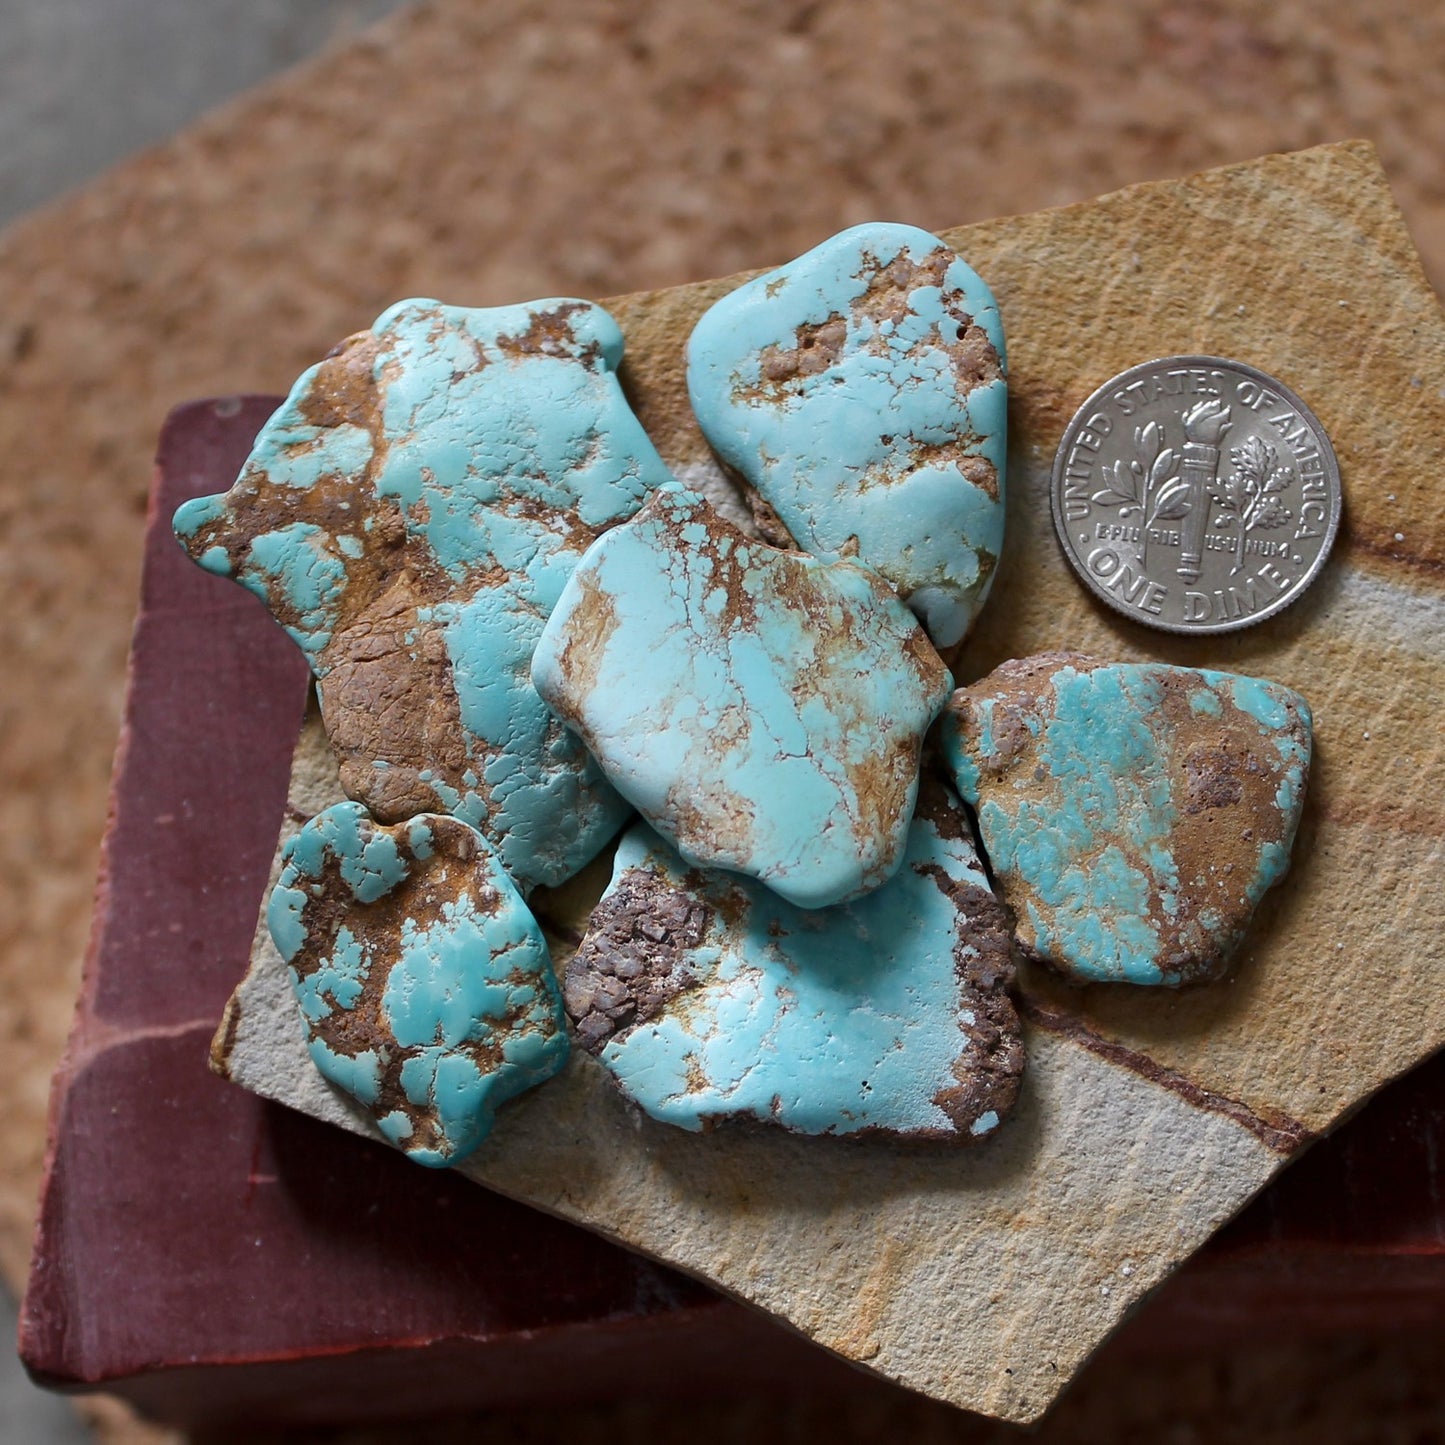 19.0 grams light blue Stone Mountain Turquoise vein segments with red matrix